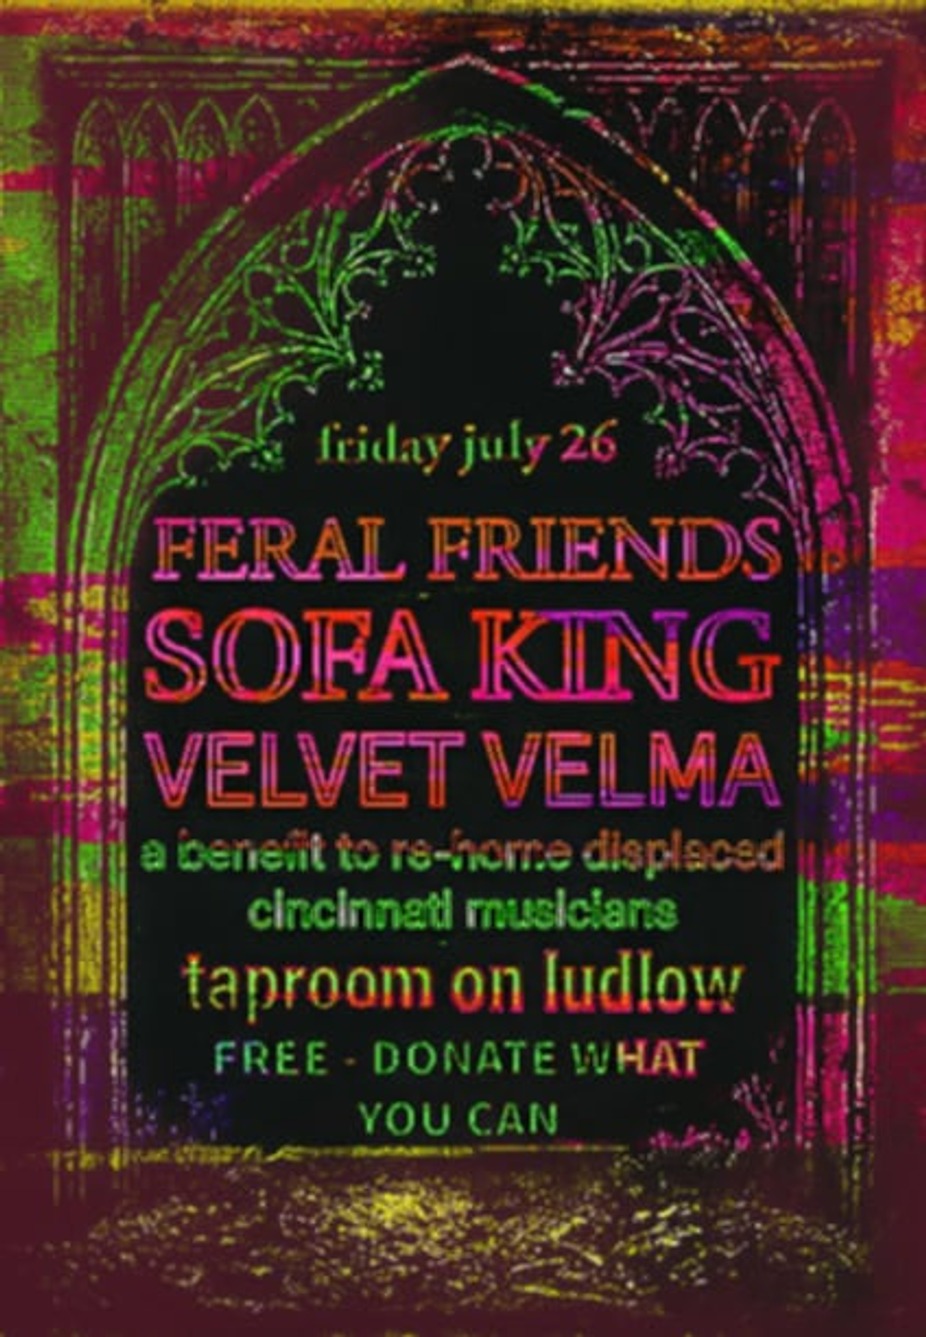 Sofa King, Velvet Velma, Feral Friends event photo